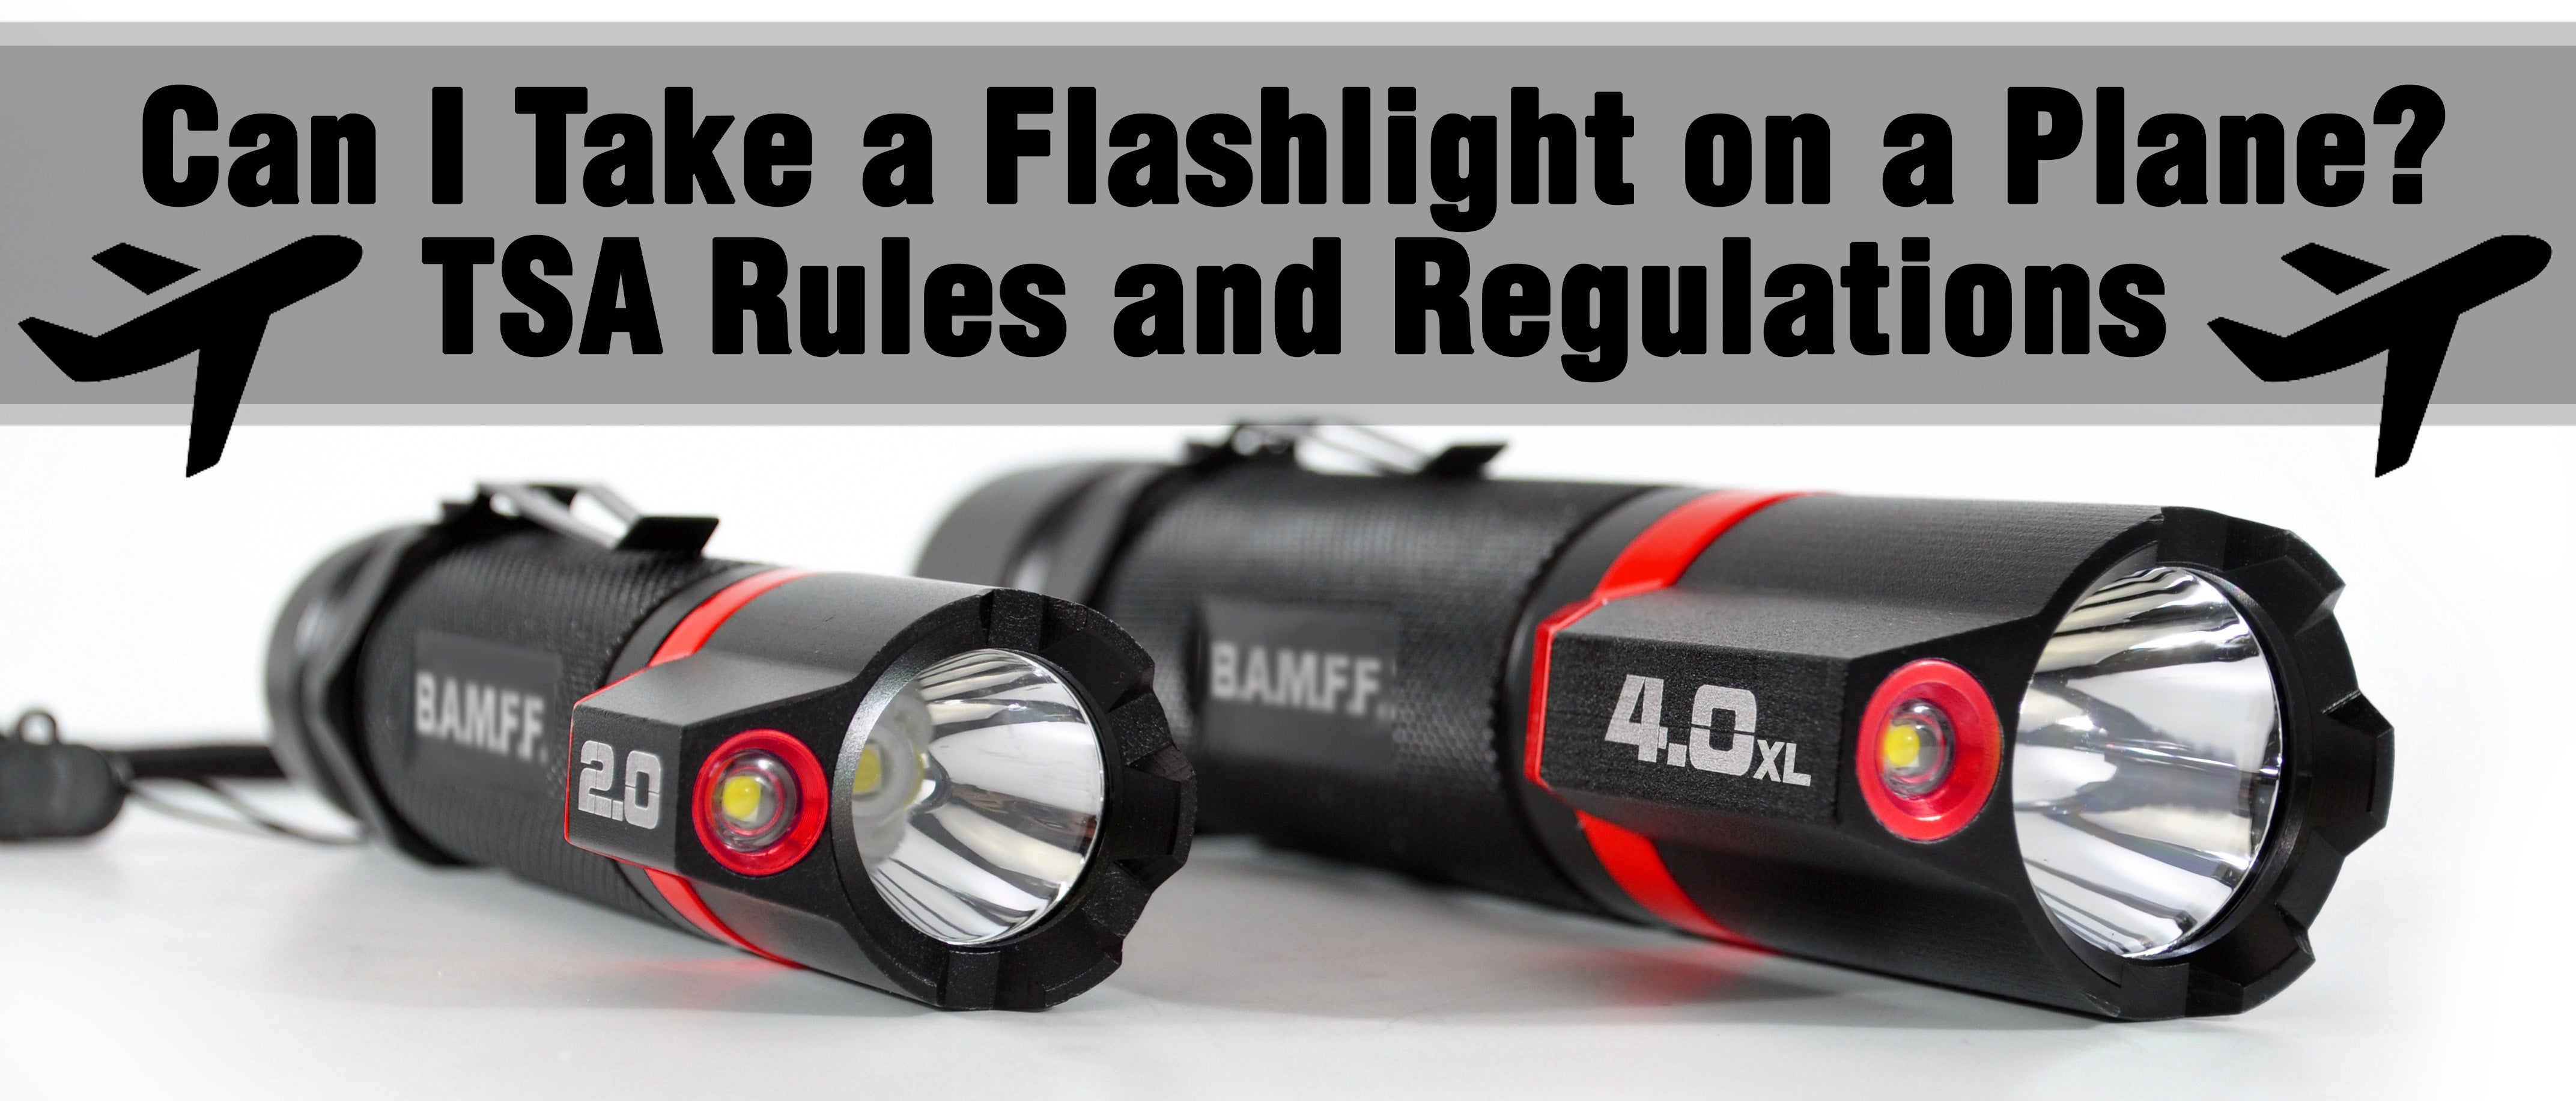 Can I Take a Flashlight on a Plane? TSA Rules and Regulations